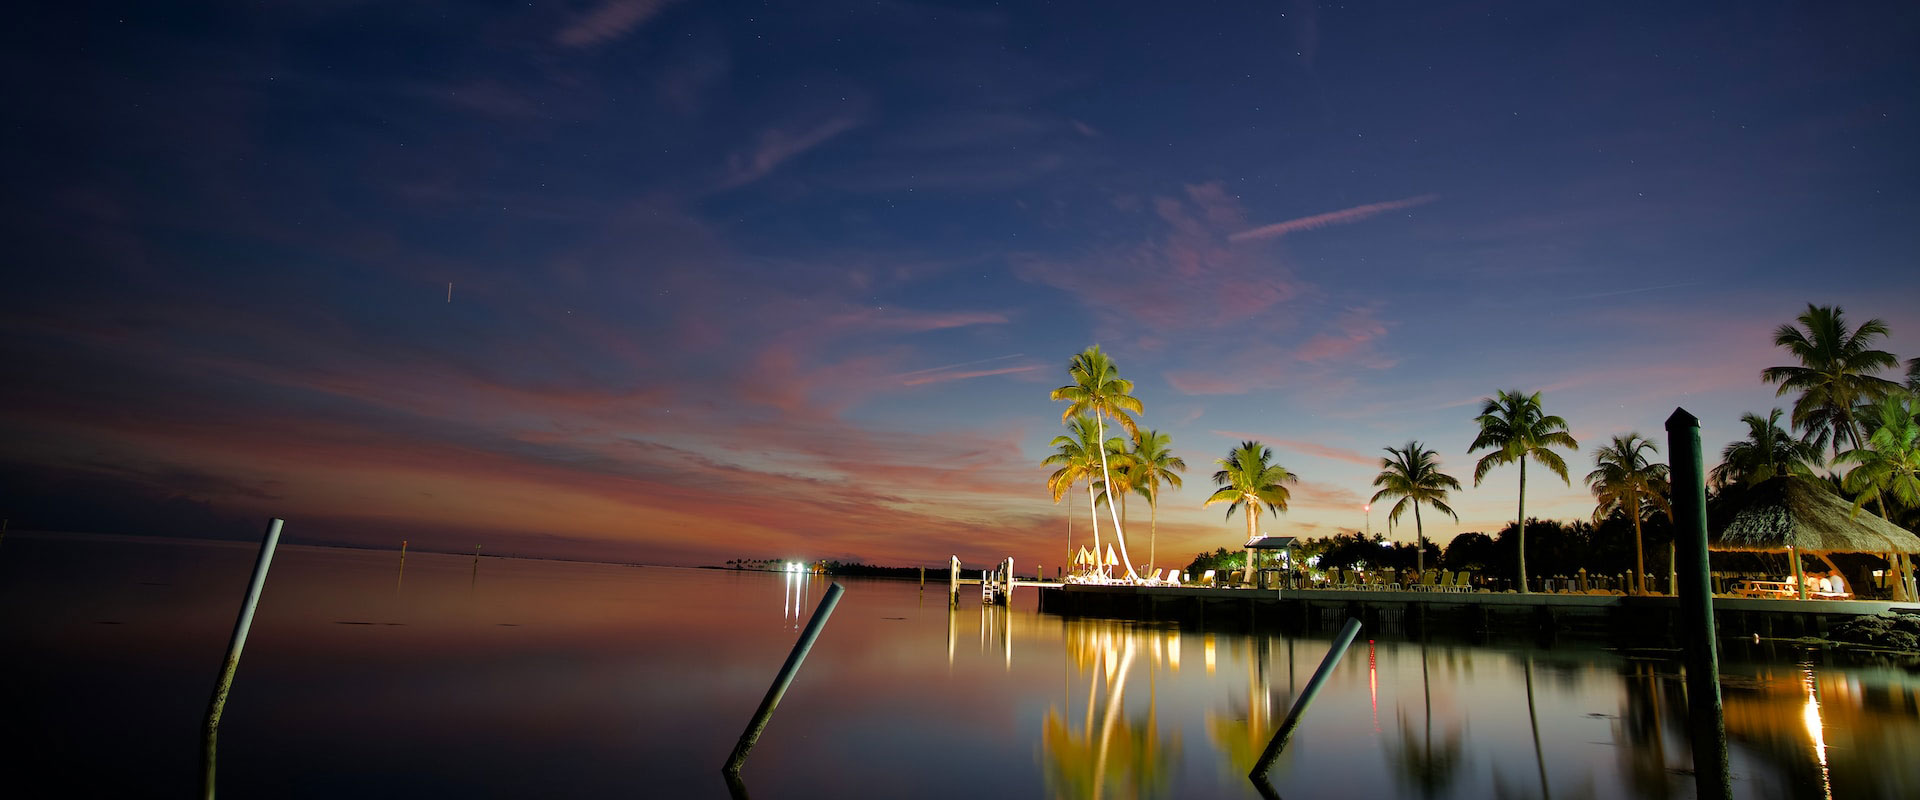 Islamorada, Florida sunset.